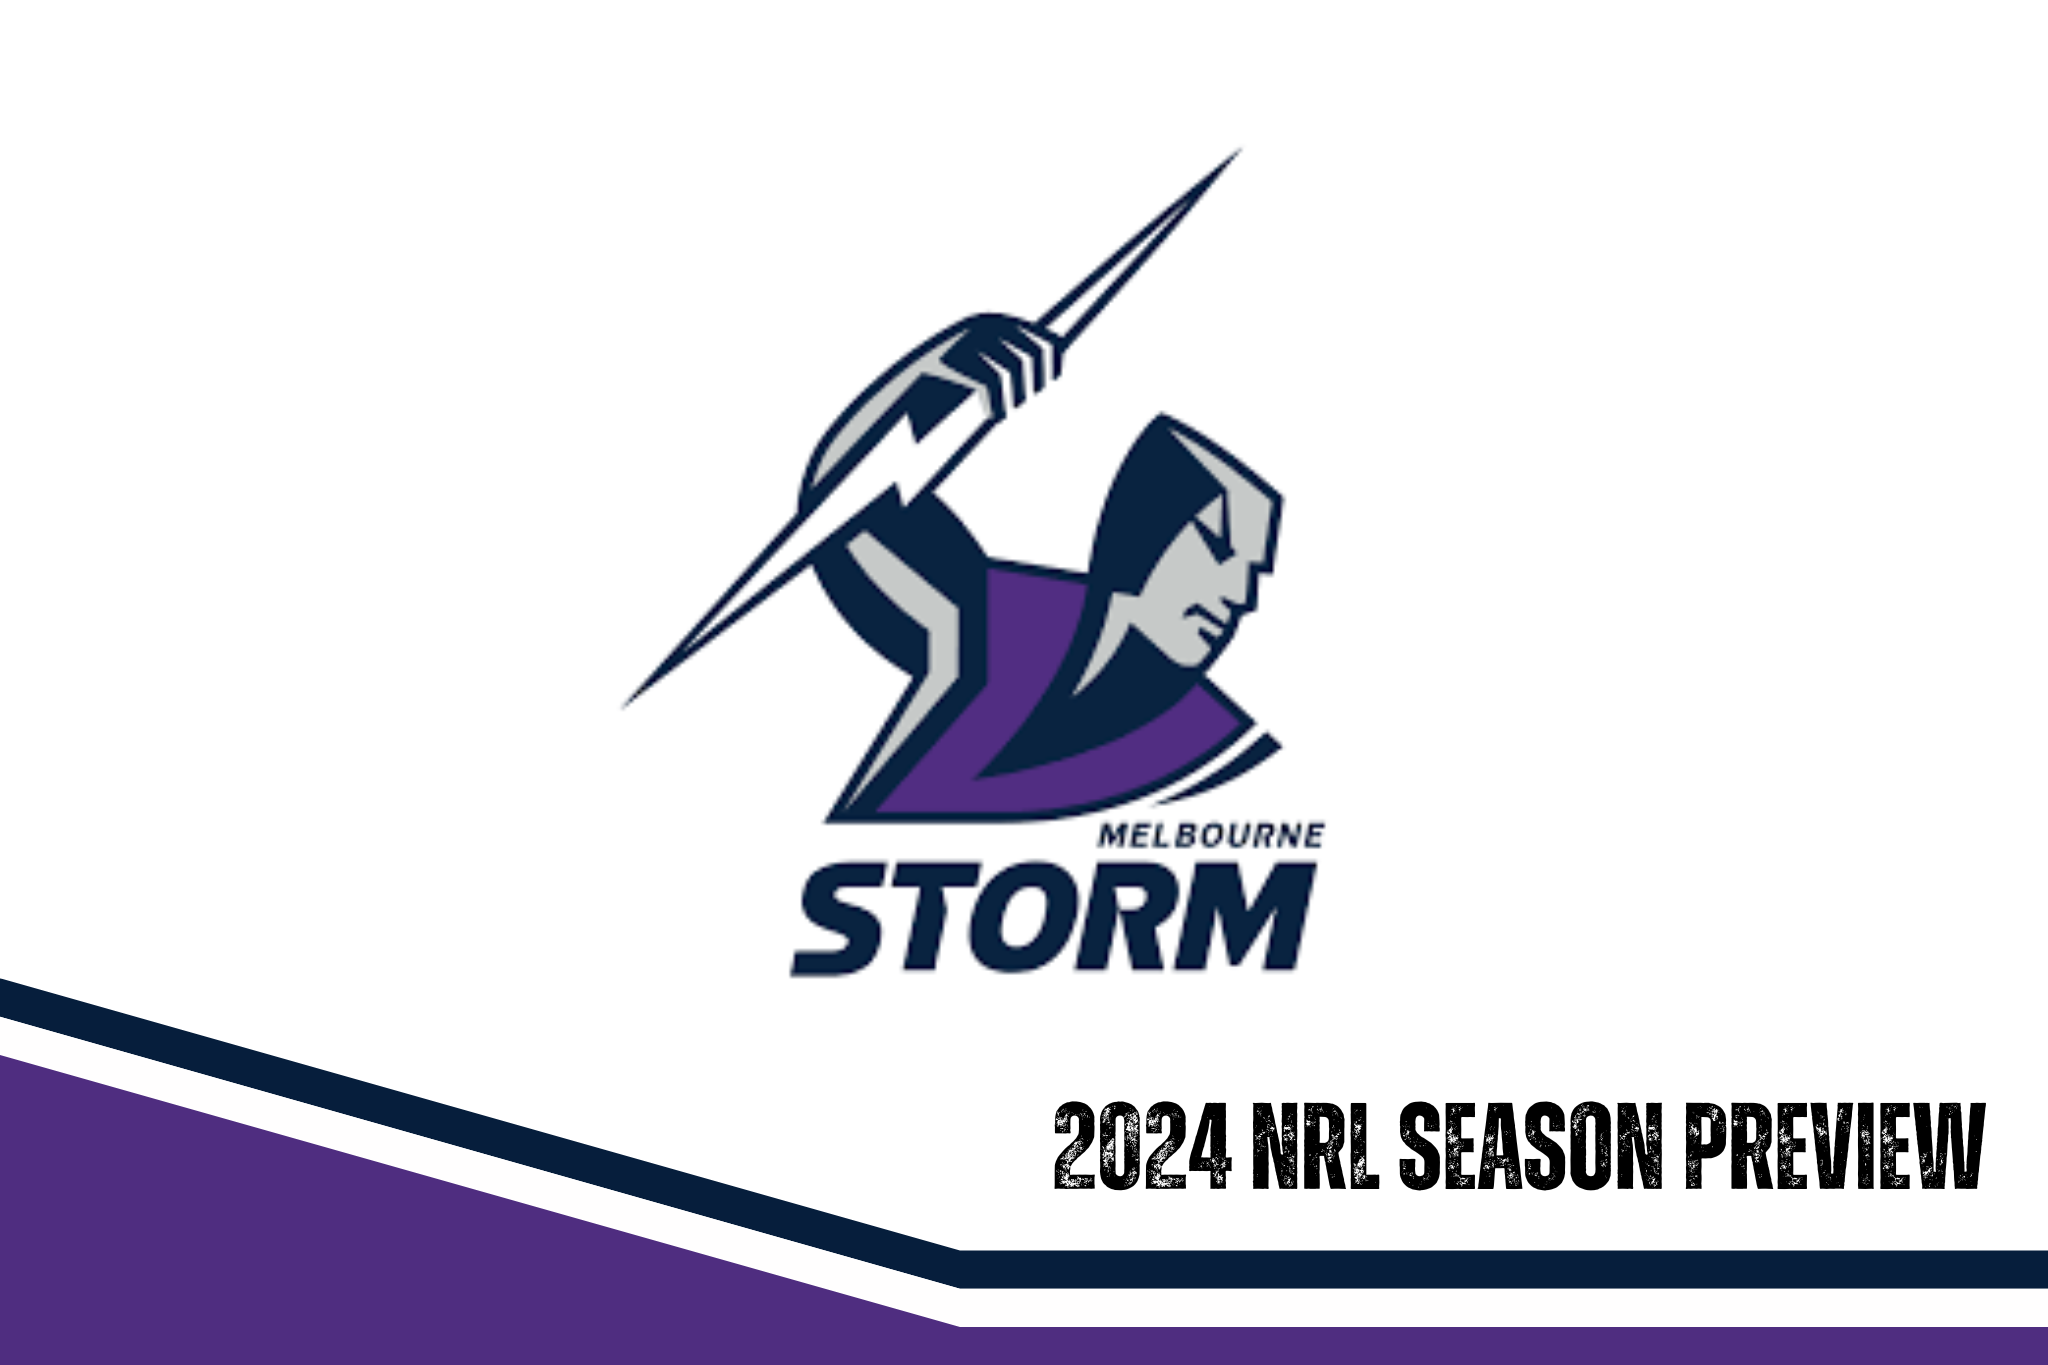 Melbourne Storm 2024 season preview